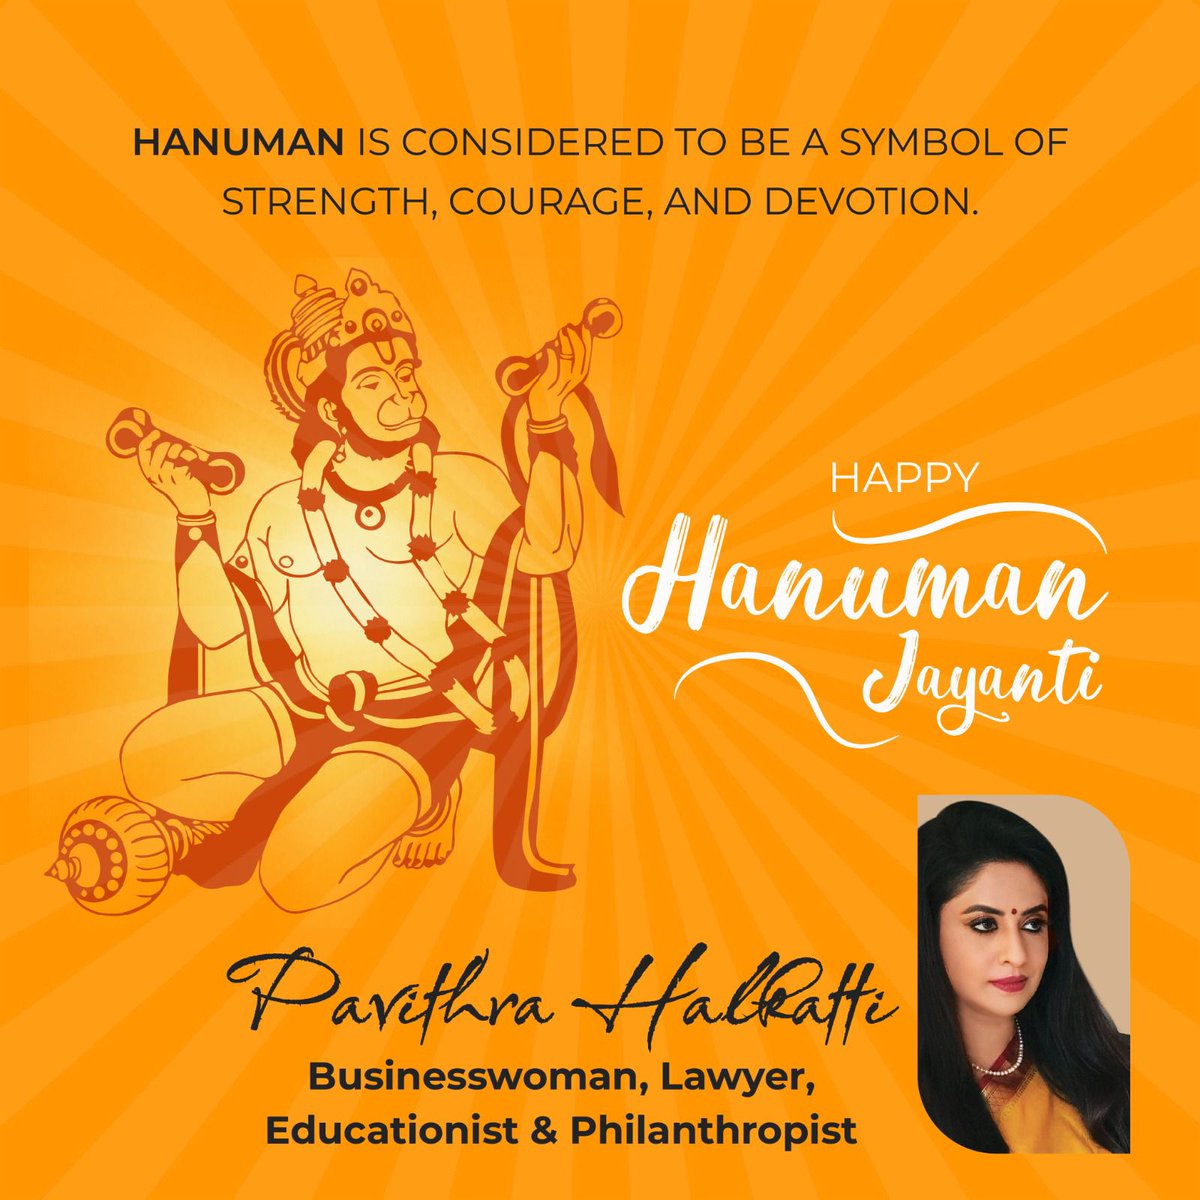 Wishing you and your family a very happy Hanuman Jayanti. May Lord Hanuman's blessings be with you always. Jai Shri Ram!  #HanumanJayanthi #Hanuman #LordHanuman #Ramayana #JaiHanuman  #HanumanChalisa #LordRama #Rama #Celebration #Festival #IndianFestival #IndianCulture #God